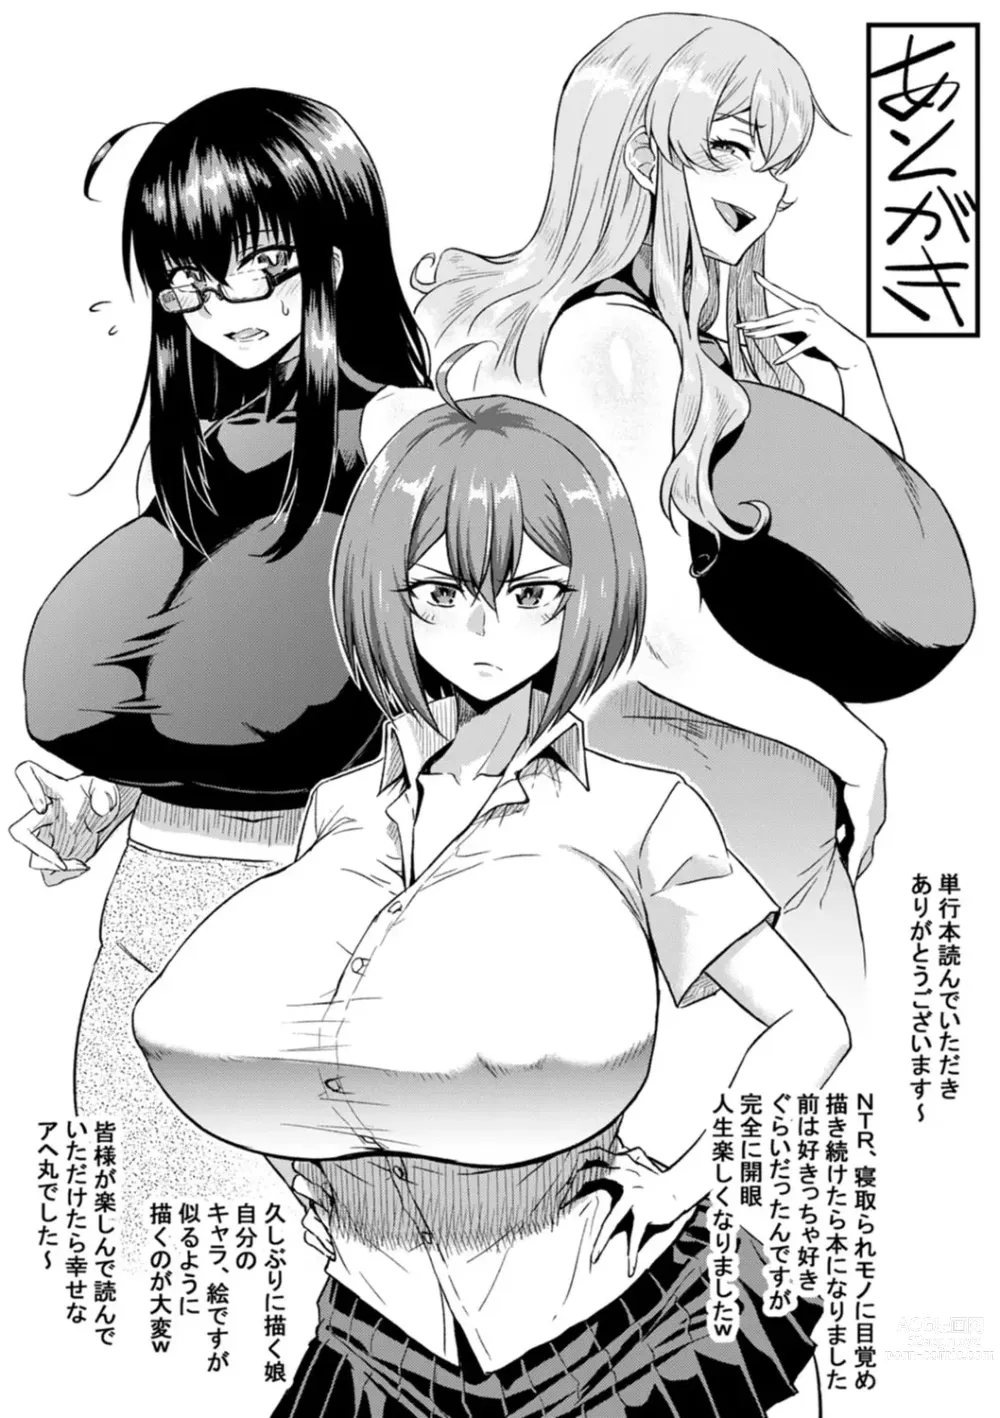 Page 189 of manga NTR na Sekai - NTR world